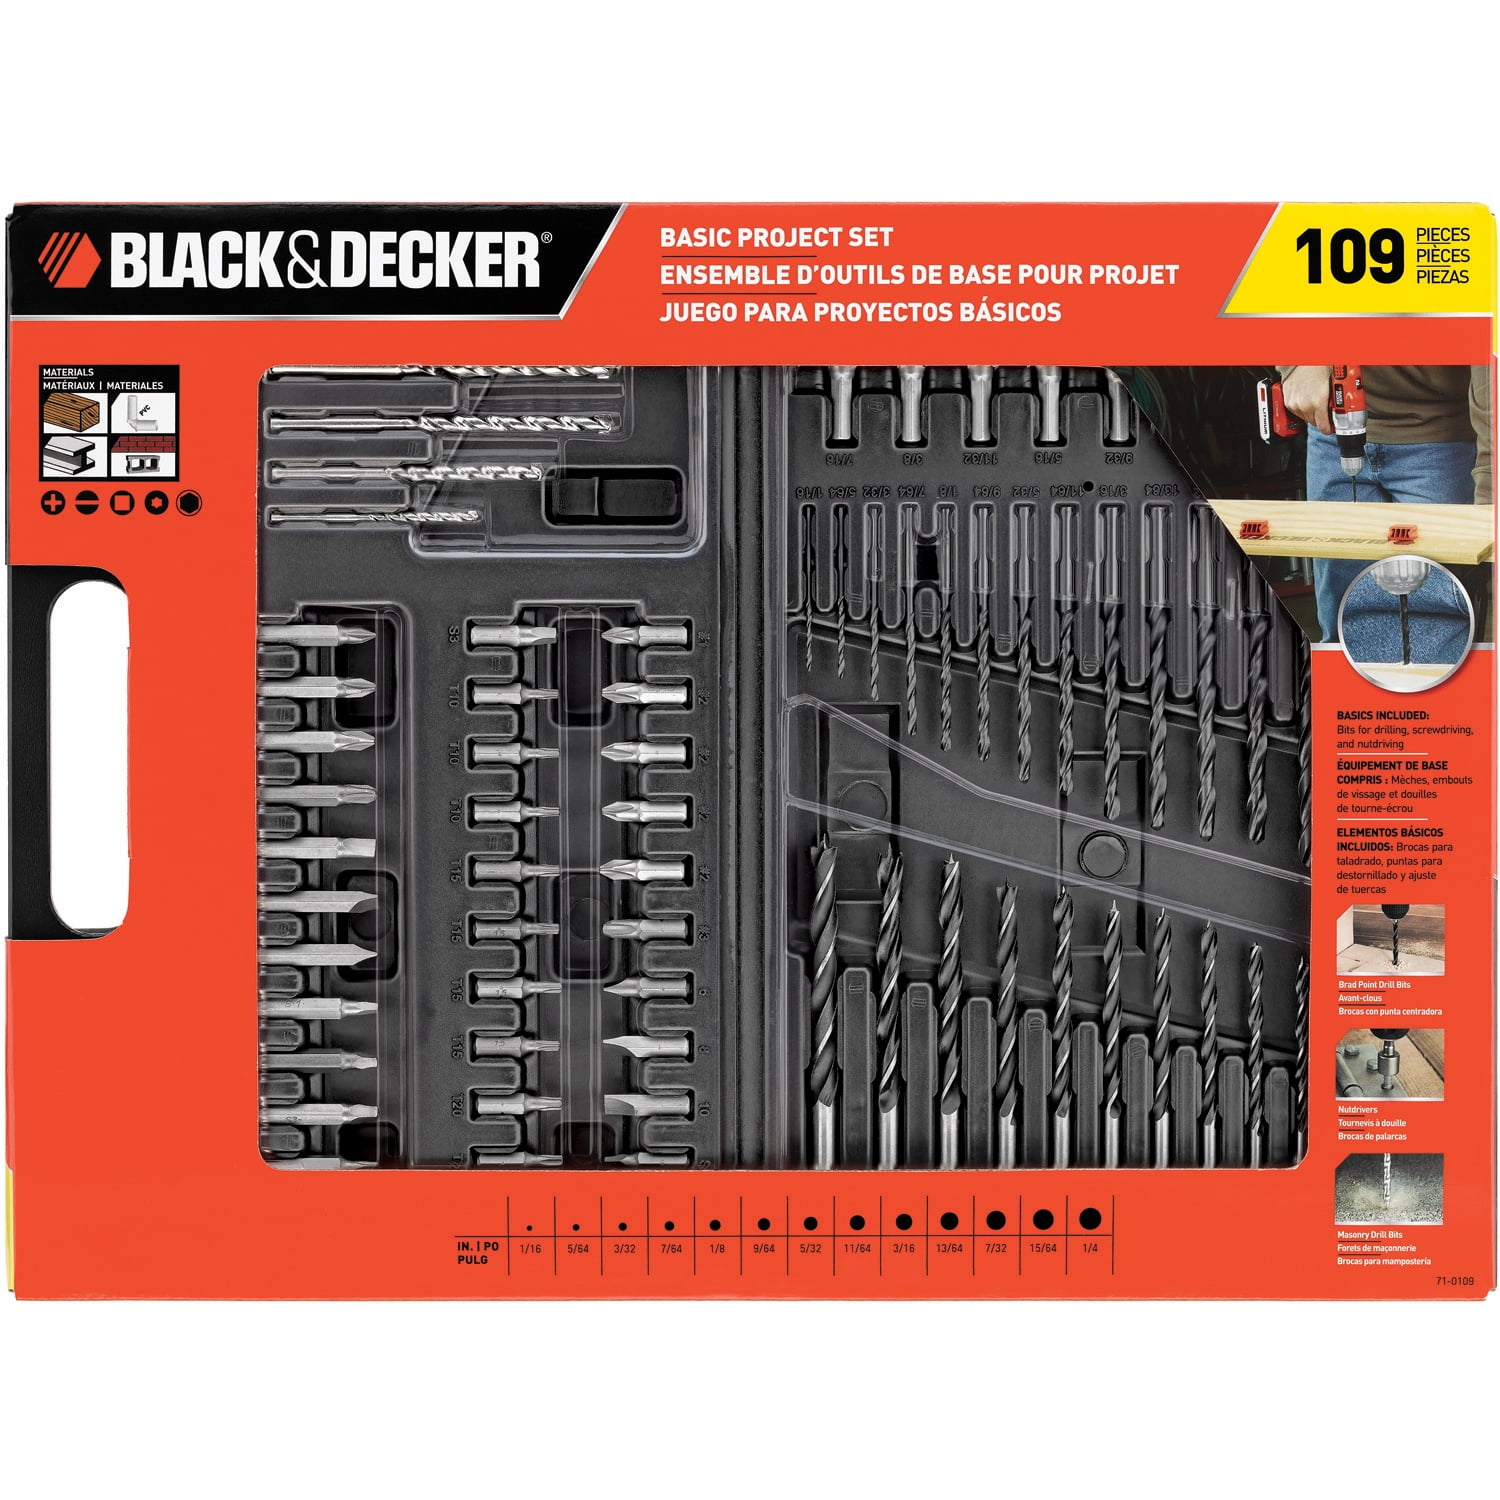 Black+Decker BDA91109 Combination Drill Bit Set, 109-Piece